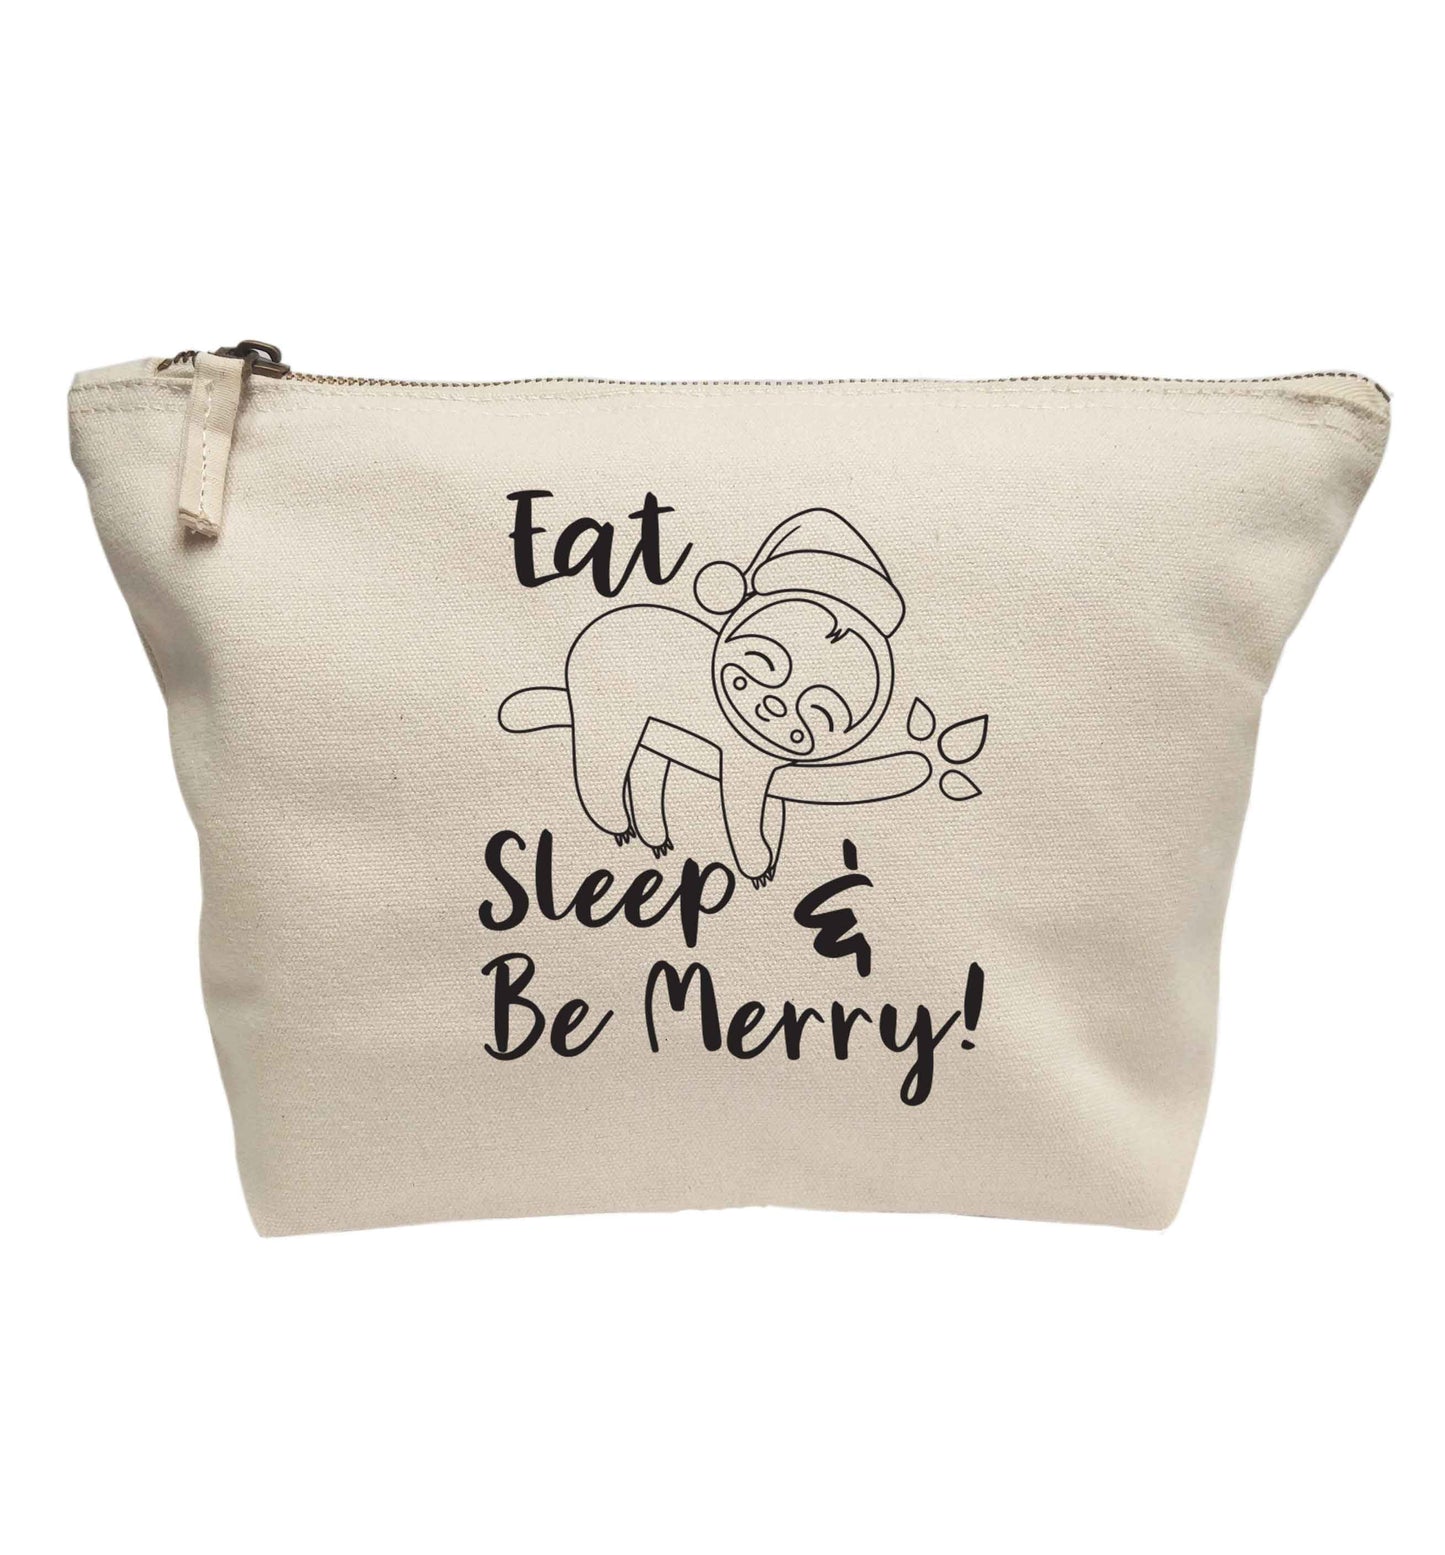 Eat, Sleep and be merry | Makeup / wash bag